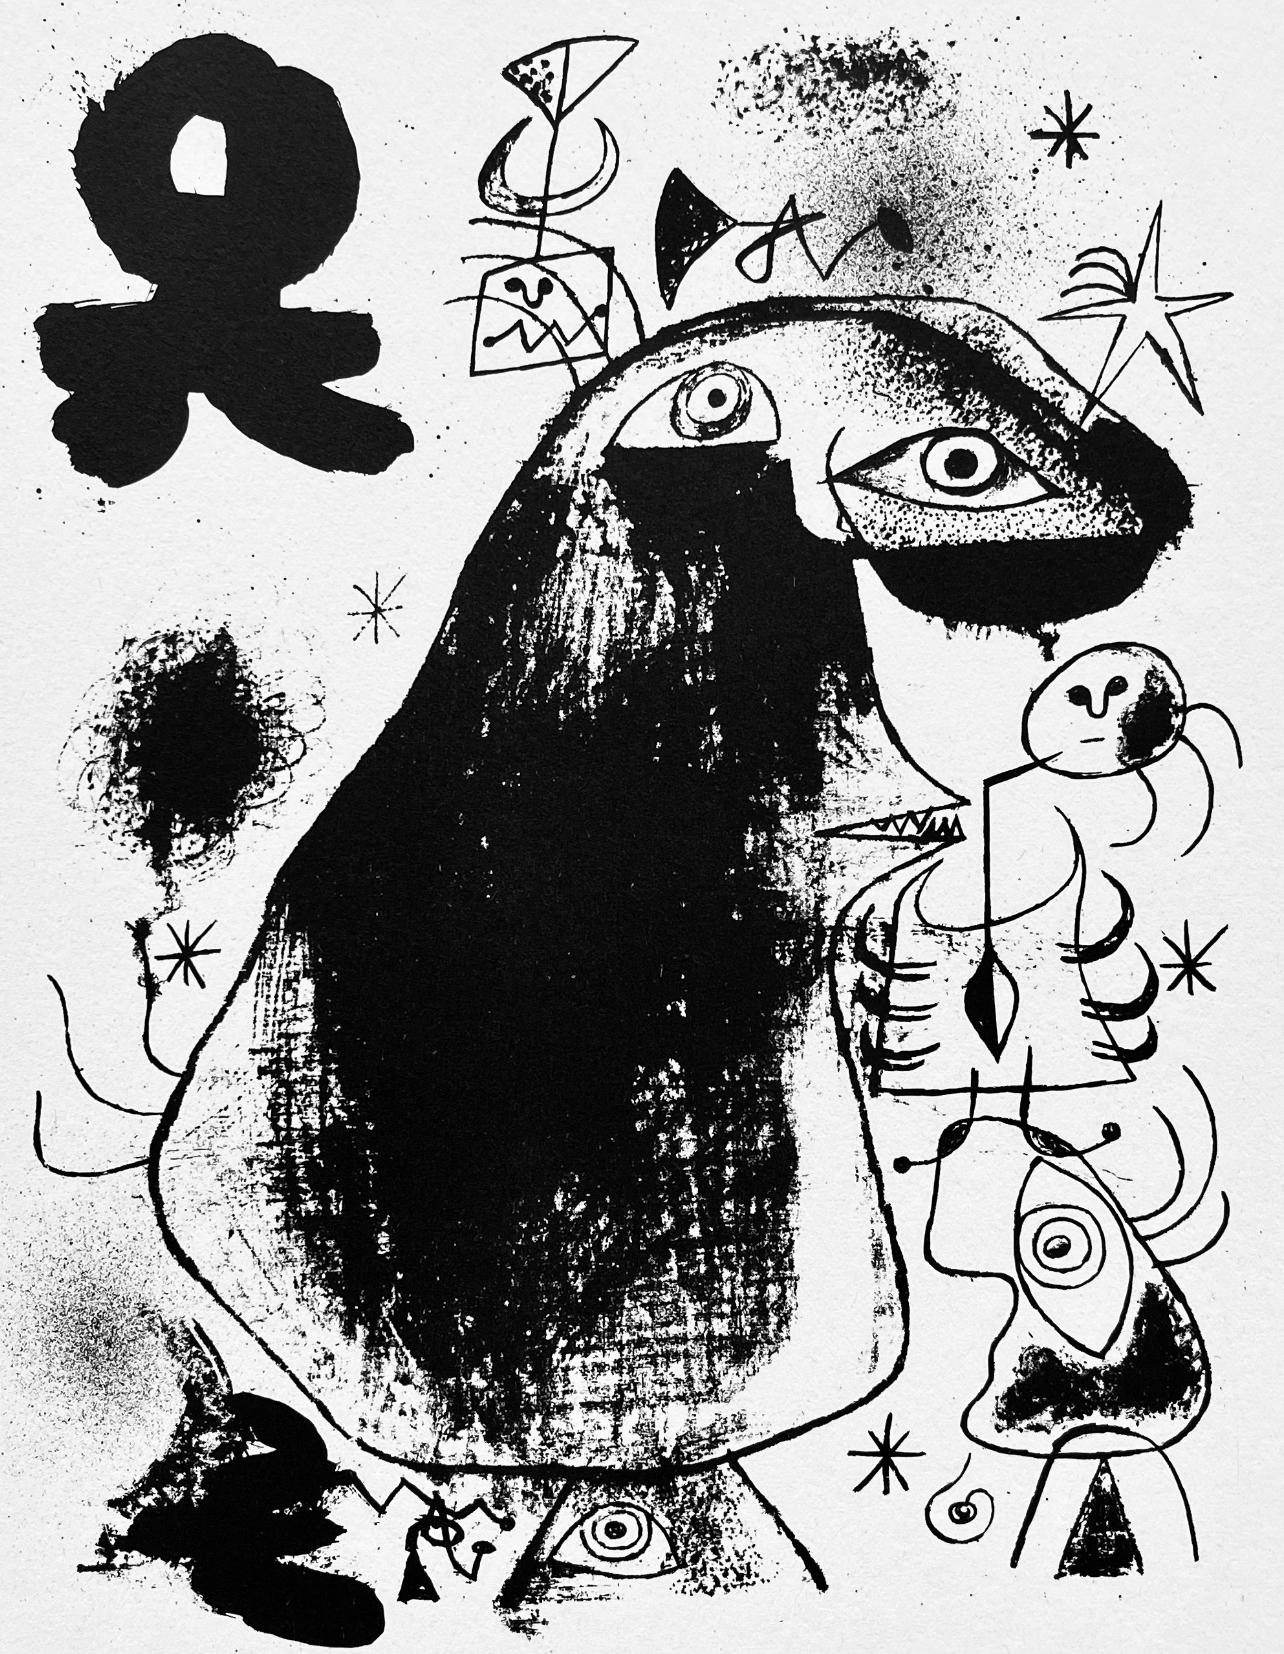 Abstract Print Joan Miró - Miro, Composition, The Prints of Joan Miro (d'après)